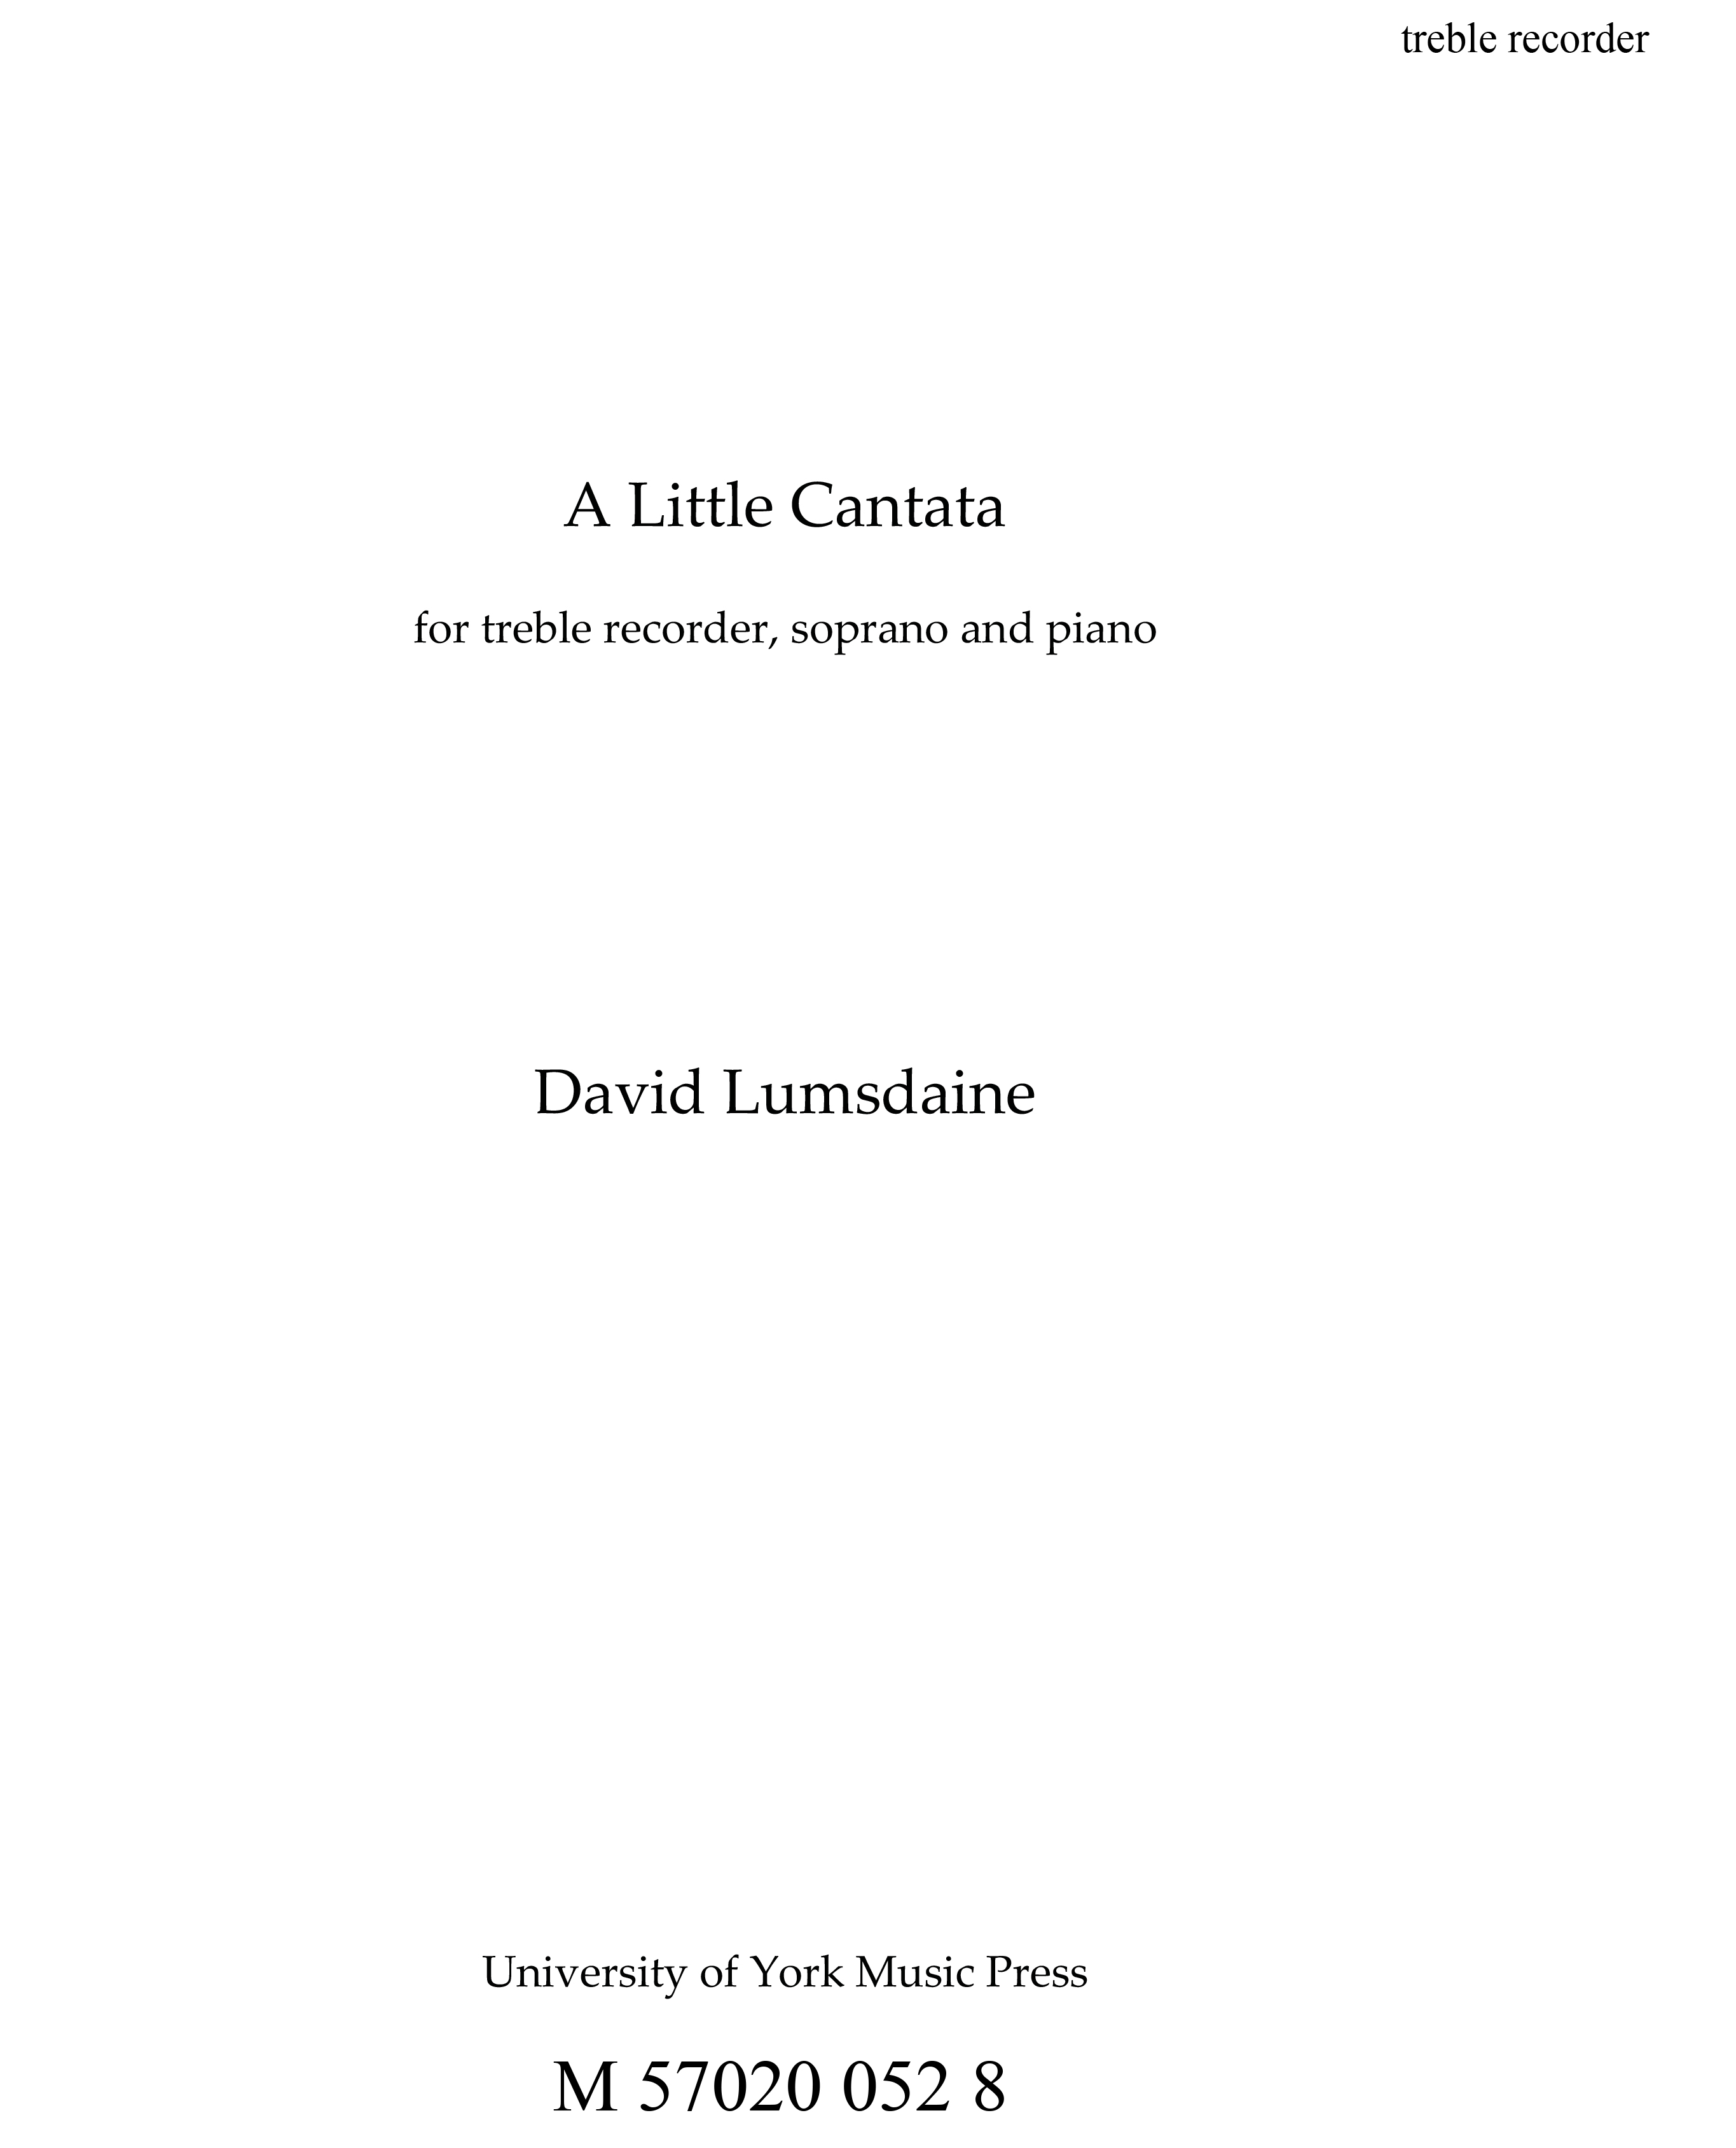 David Lumsdaine: A Little Cantata (Parts)